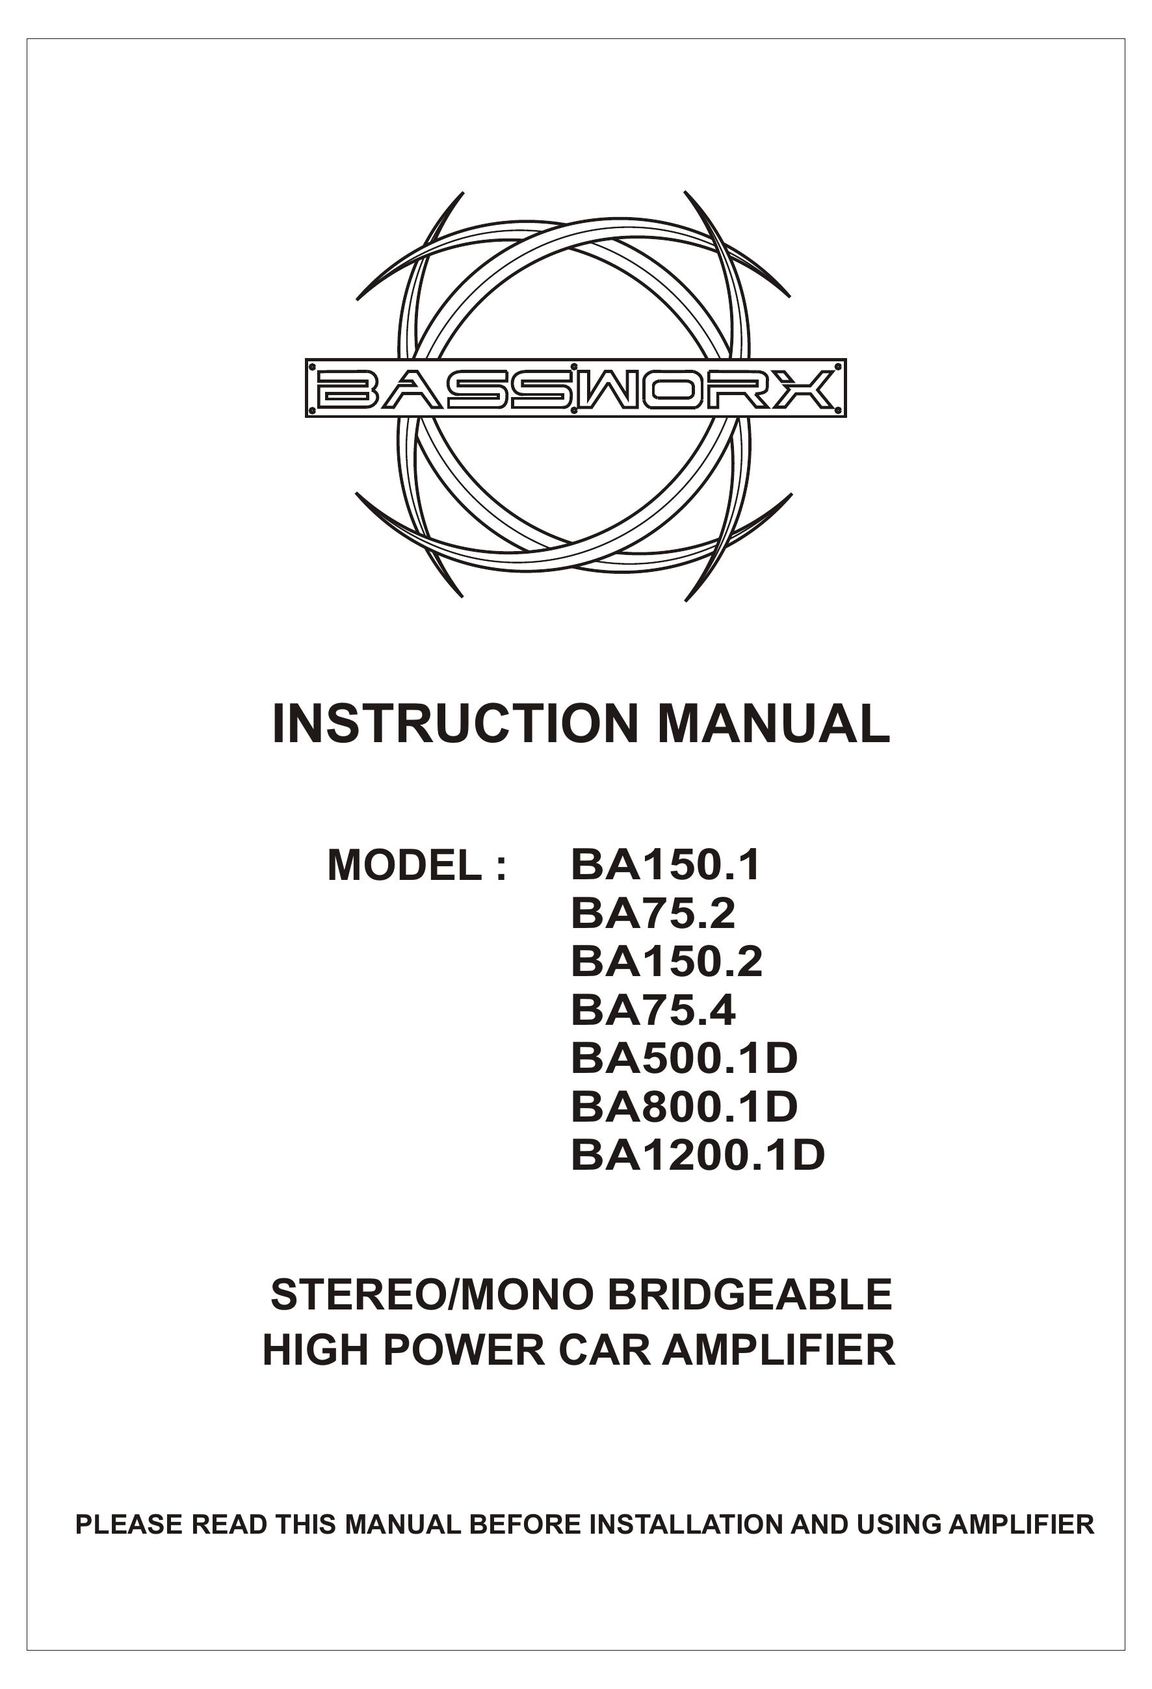 Bassworx BA150.1 Car Amplifier User Manual